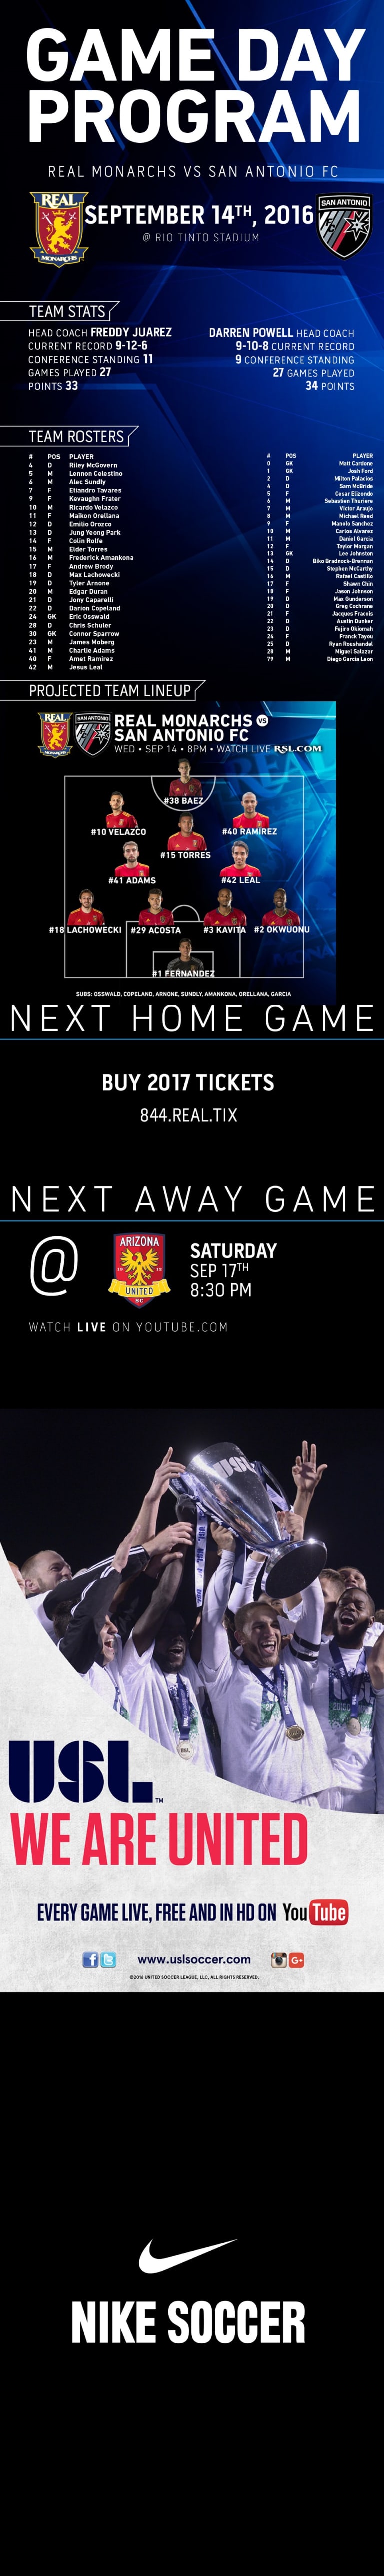 Watch Live: Real Monarchs vs. San Antonio FC; 8 p.m. MT -